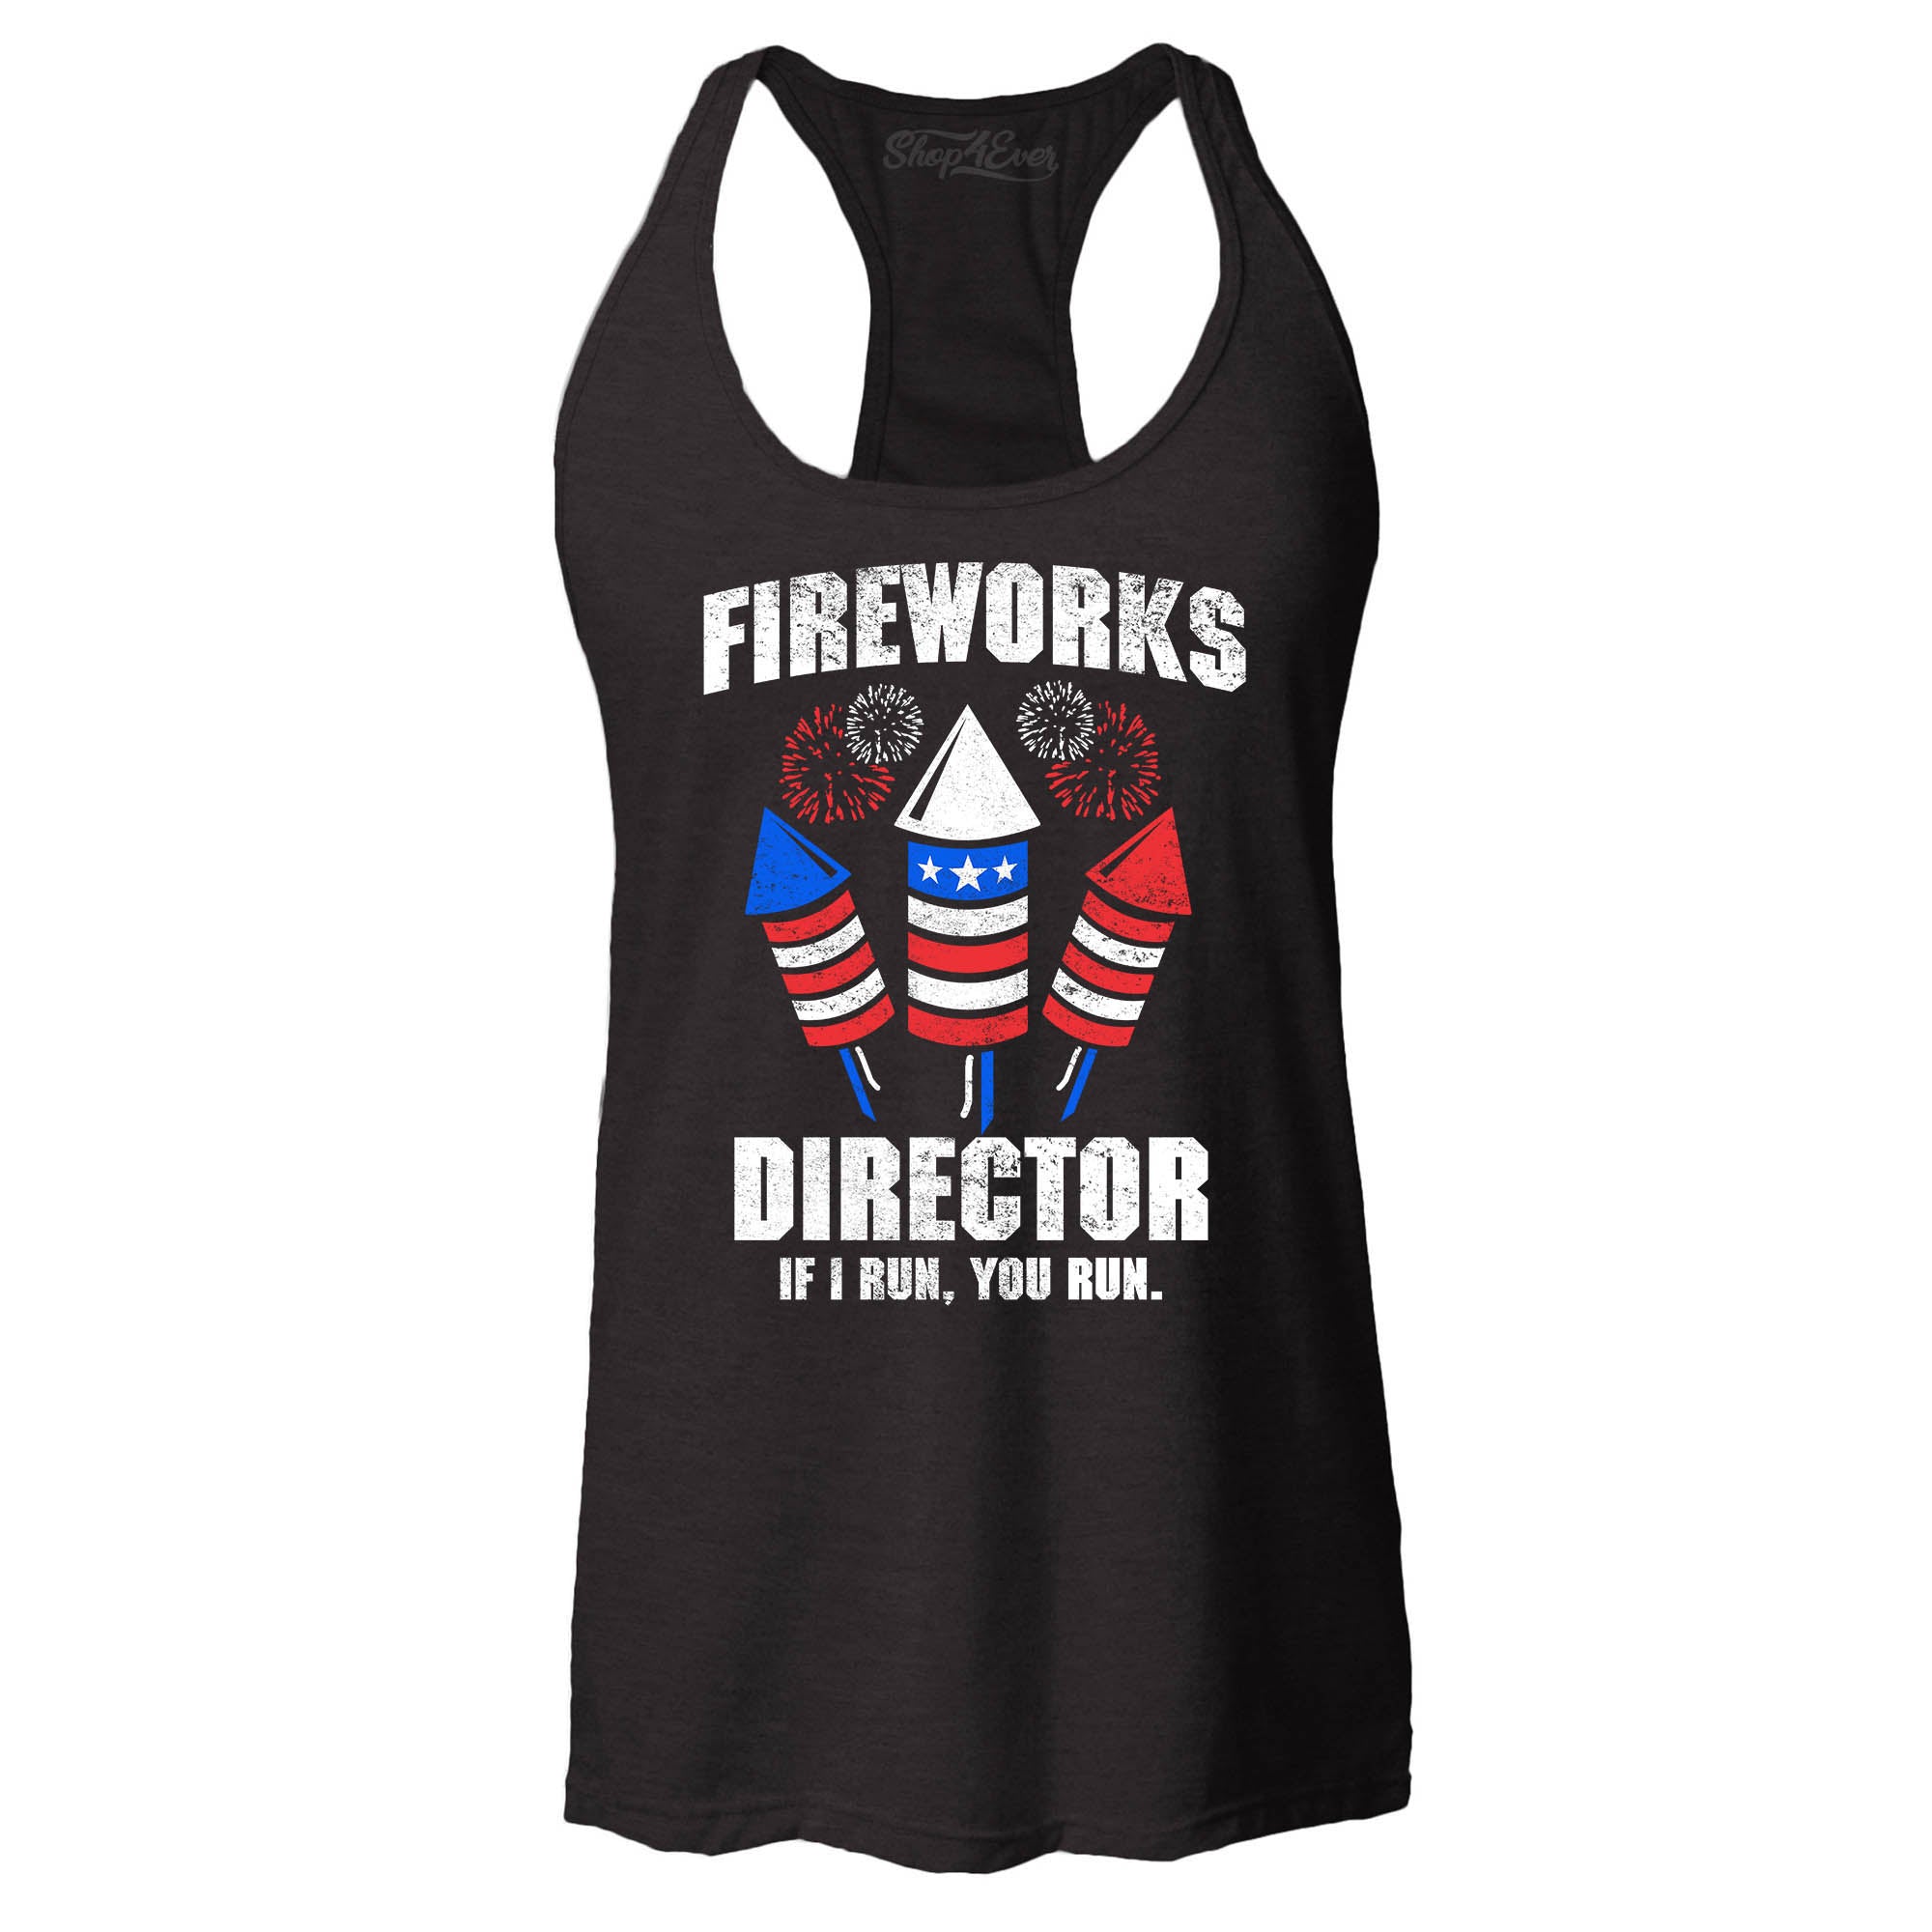 Fireworks Director 4th of July Women's Racerback Tank Top Slim Fit